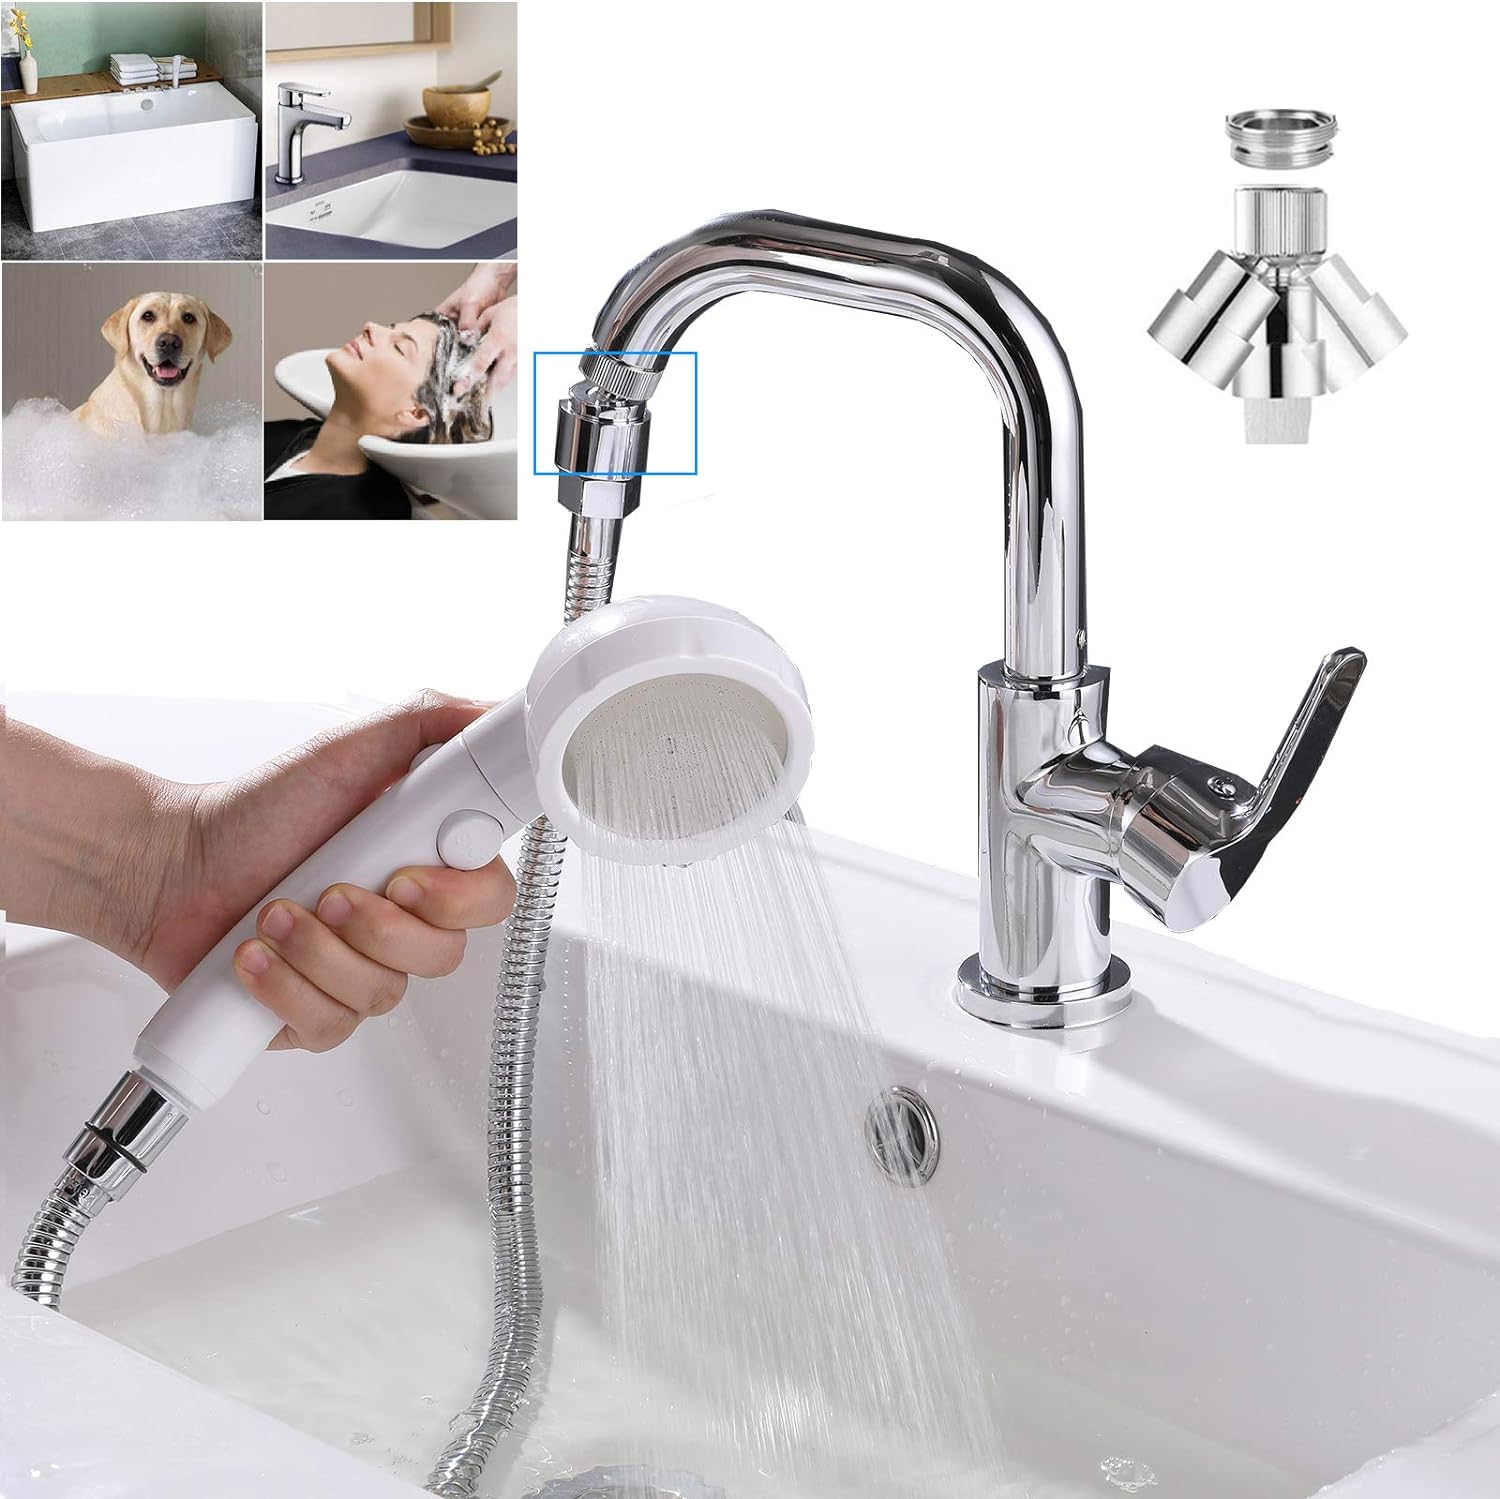 Qmlala Shower Adapter For Tub Faucet, Bathtub Spout Sprayer Attachment